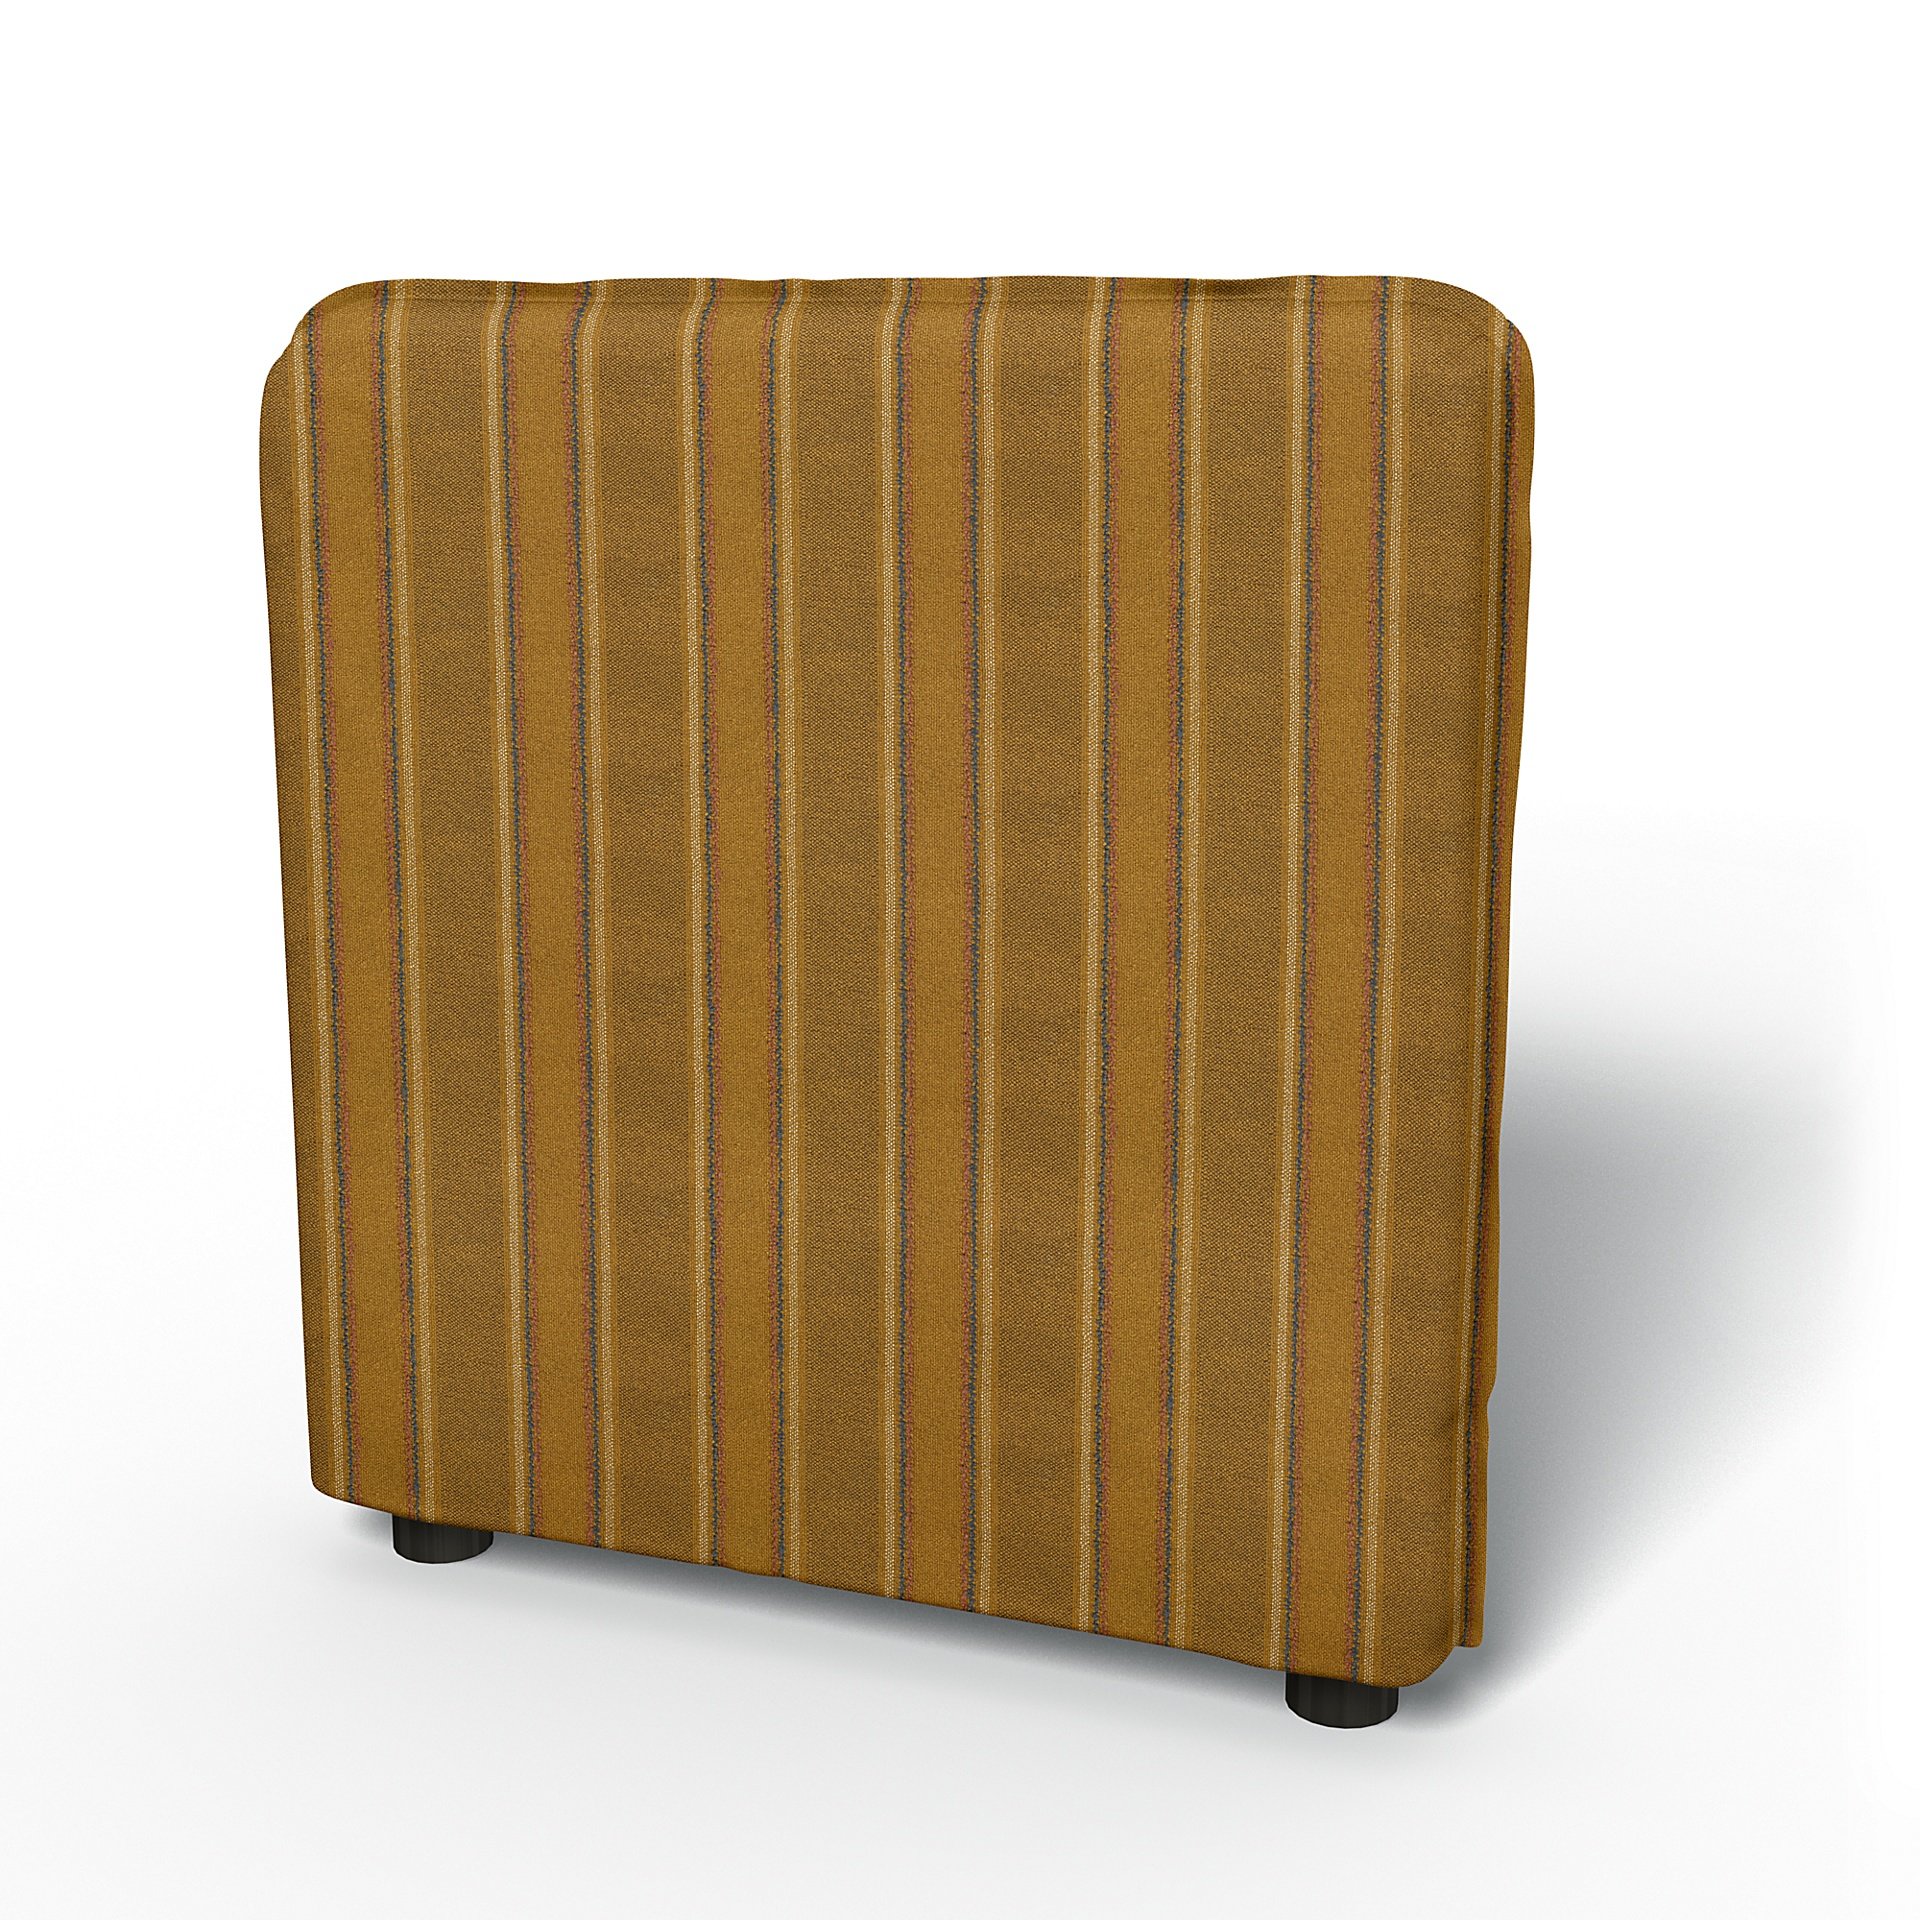 IKEA - Vallentuna Armrest Cover (80x60x13cm), Mustard Stripe, Cotton - Bemz